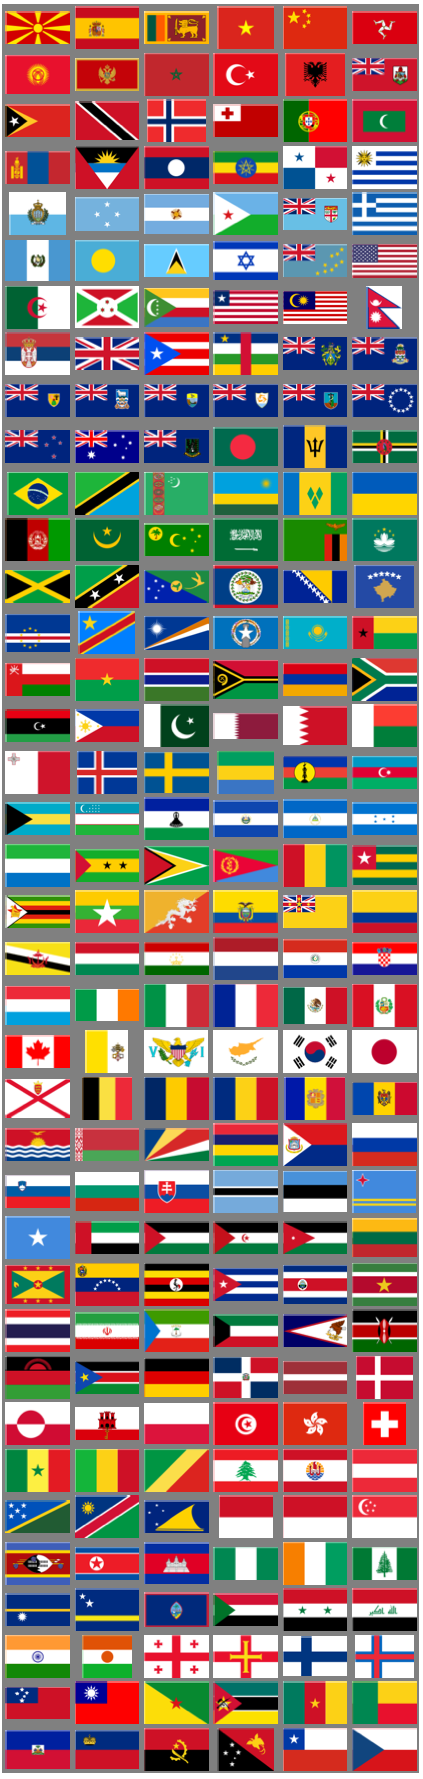 List of similar flags